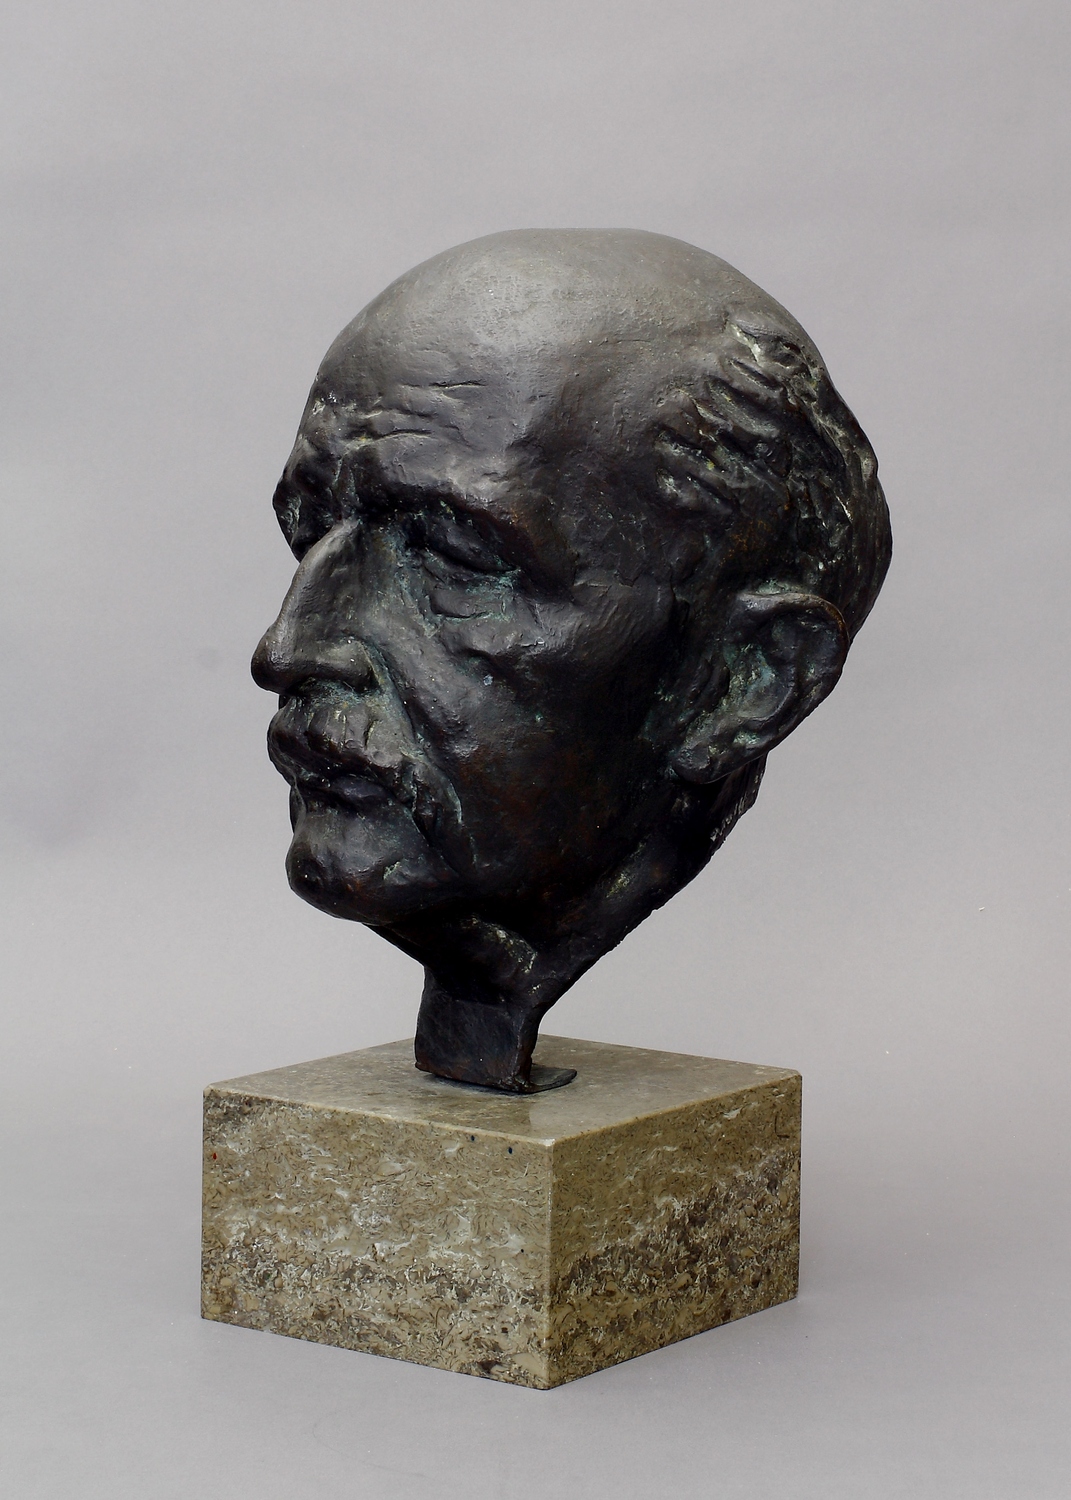 Auktionshaus Quentin Berlin  Skulptur Wolff  Walther  PortrÃ¤t Professor Max Planck (1858 - 1947). (19)39